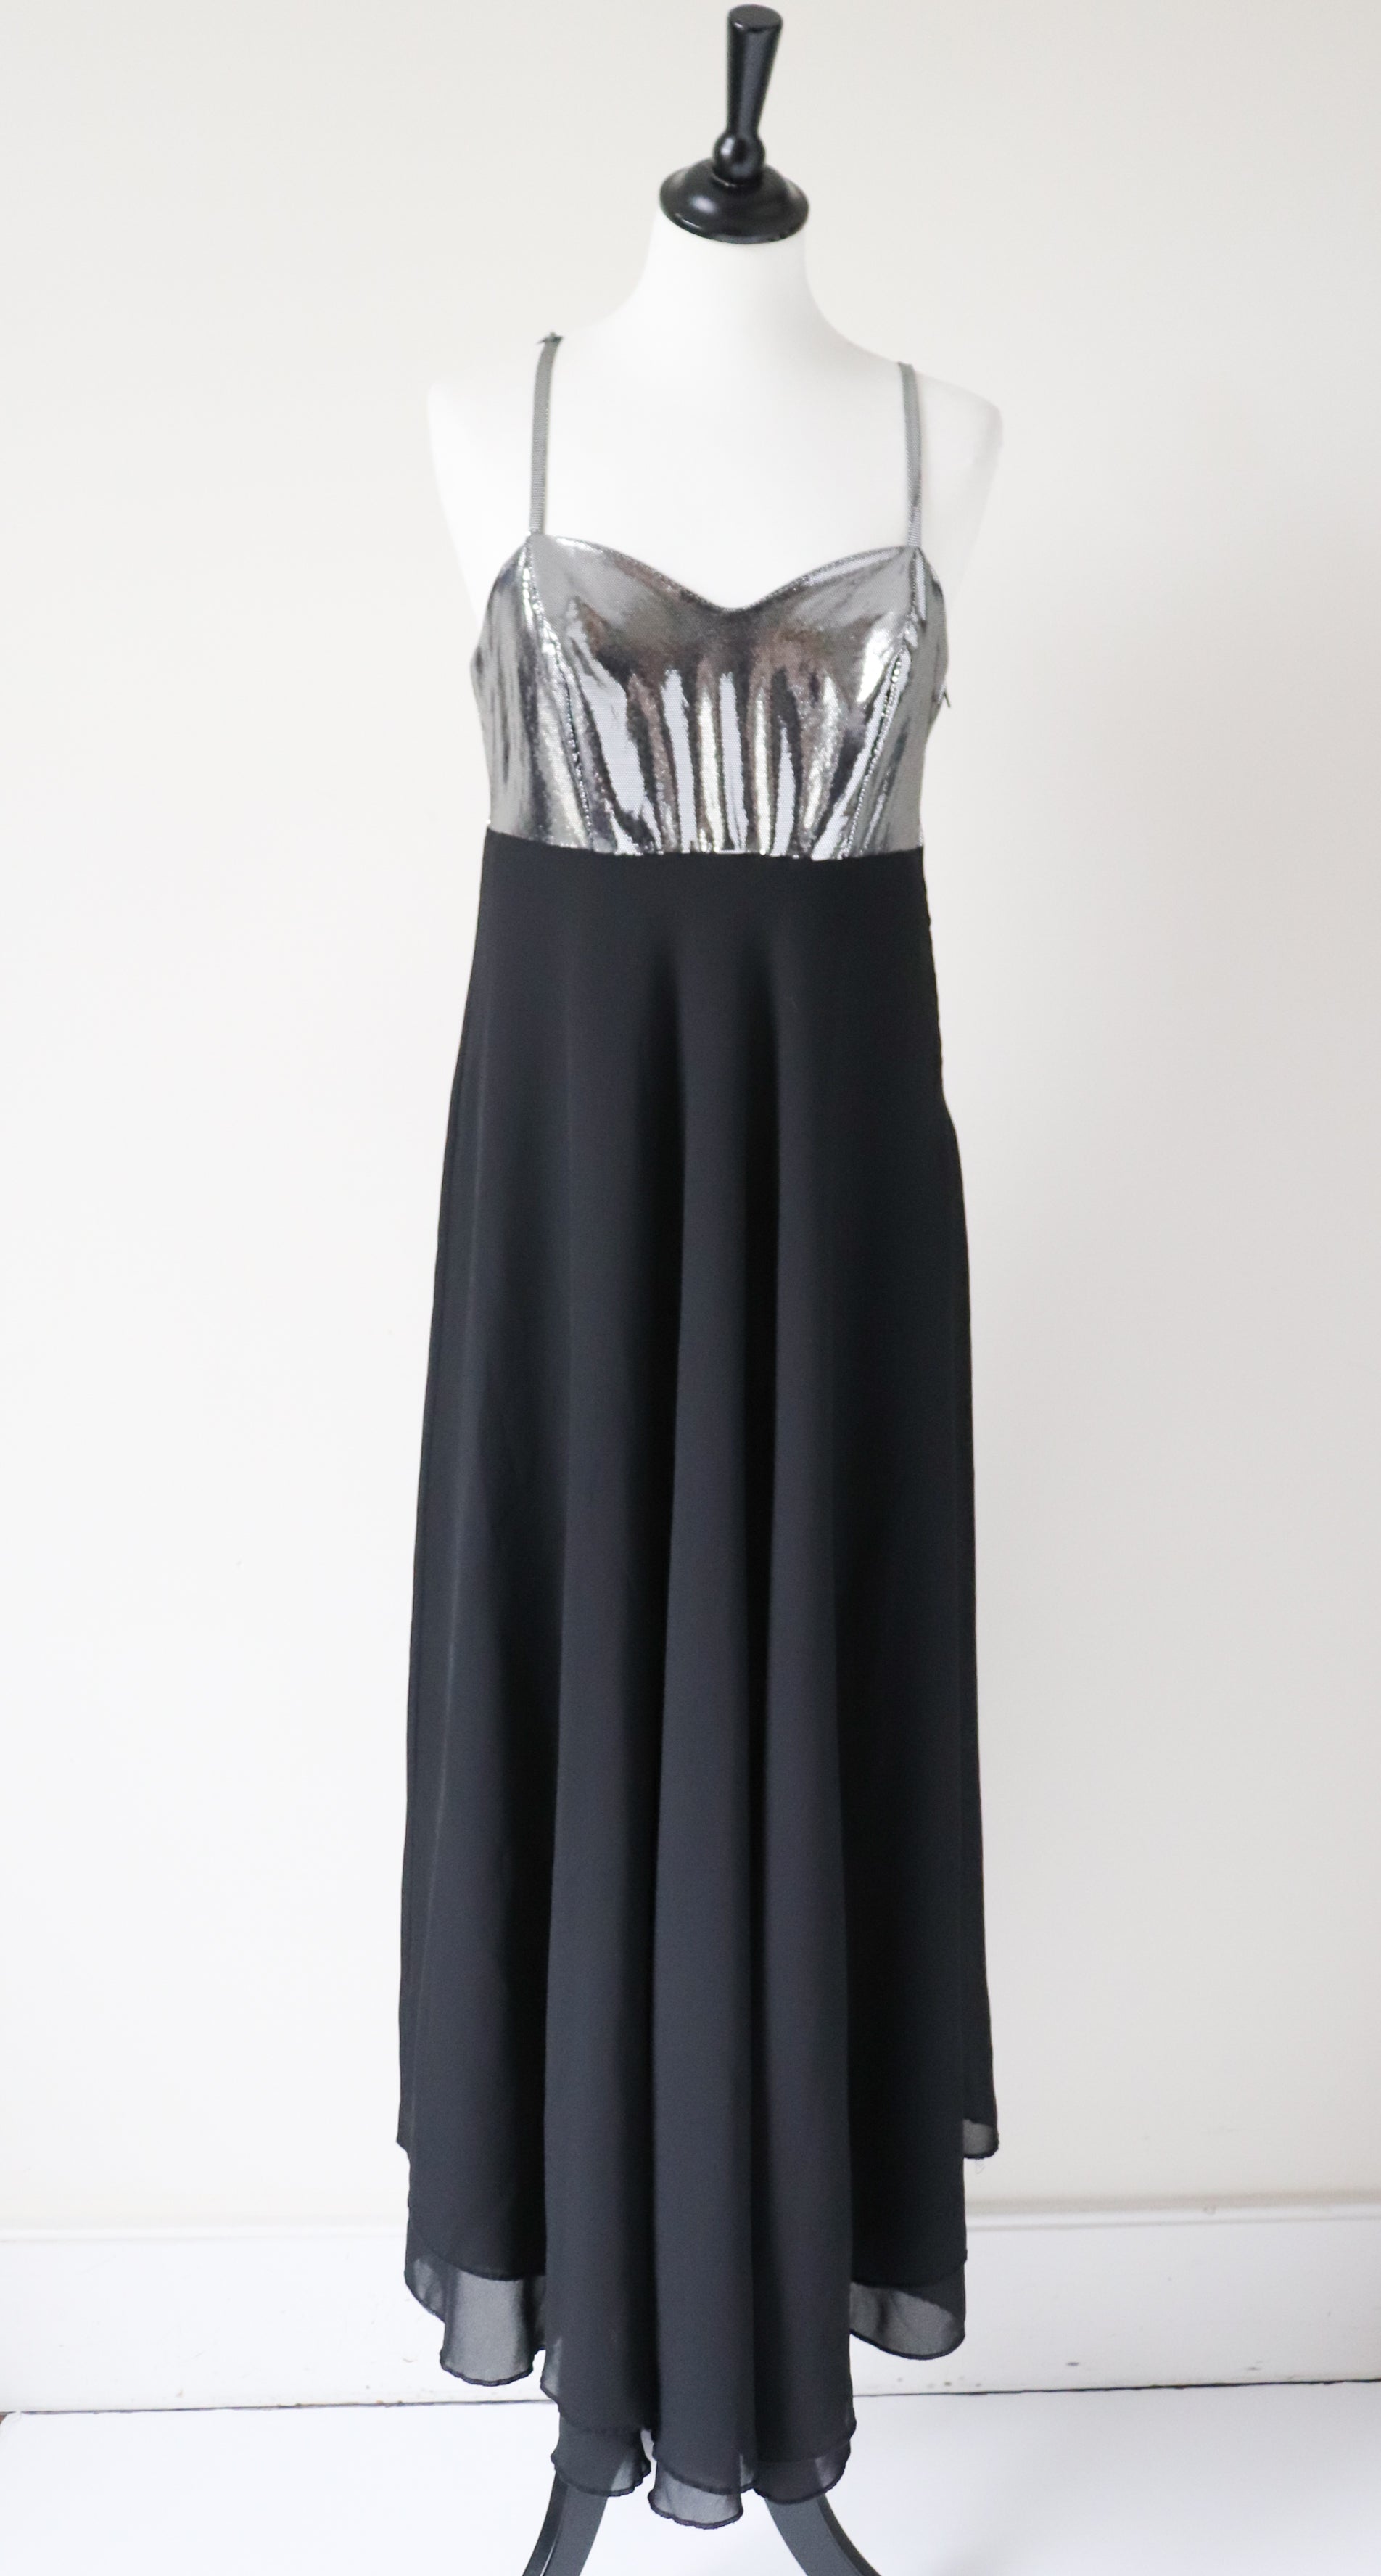 Strappy Black / Silver Evening Dress  - Long / Maxi - 1980s- Empire Waist - M / UK 12